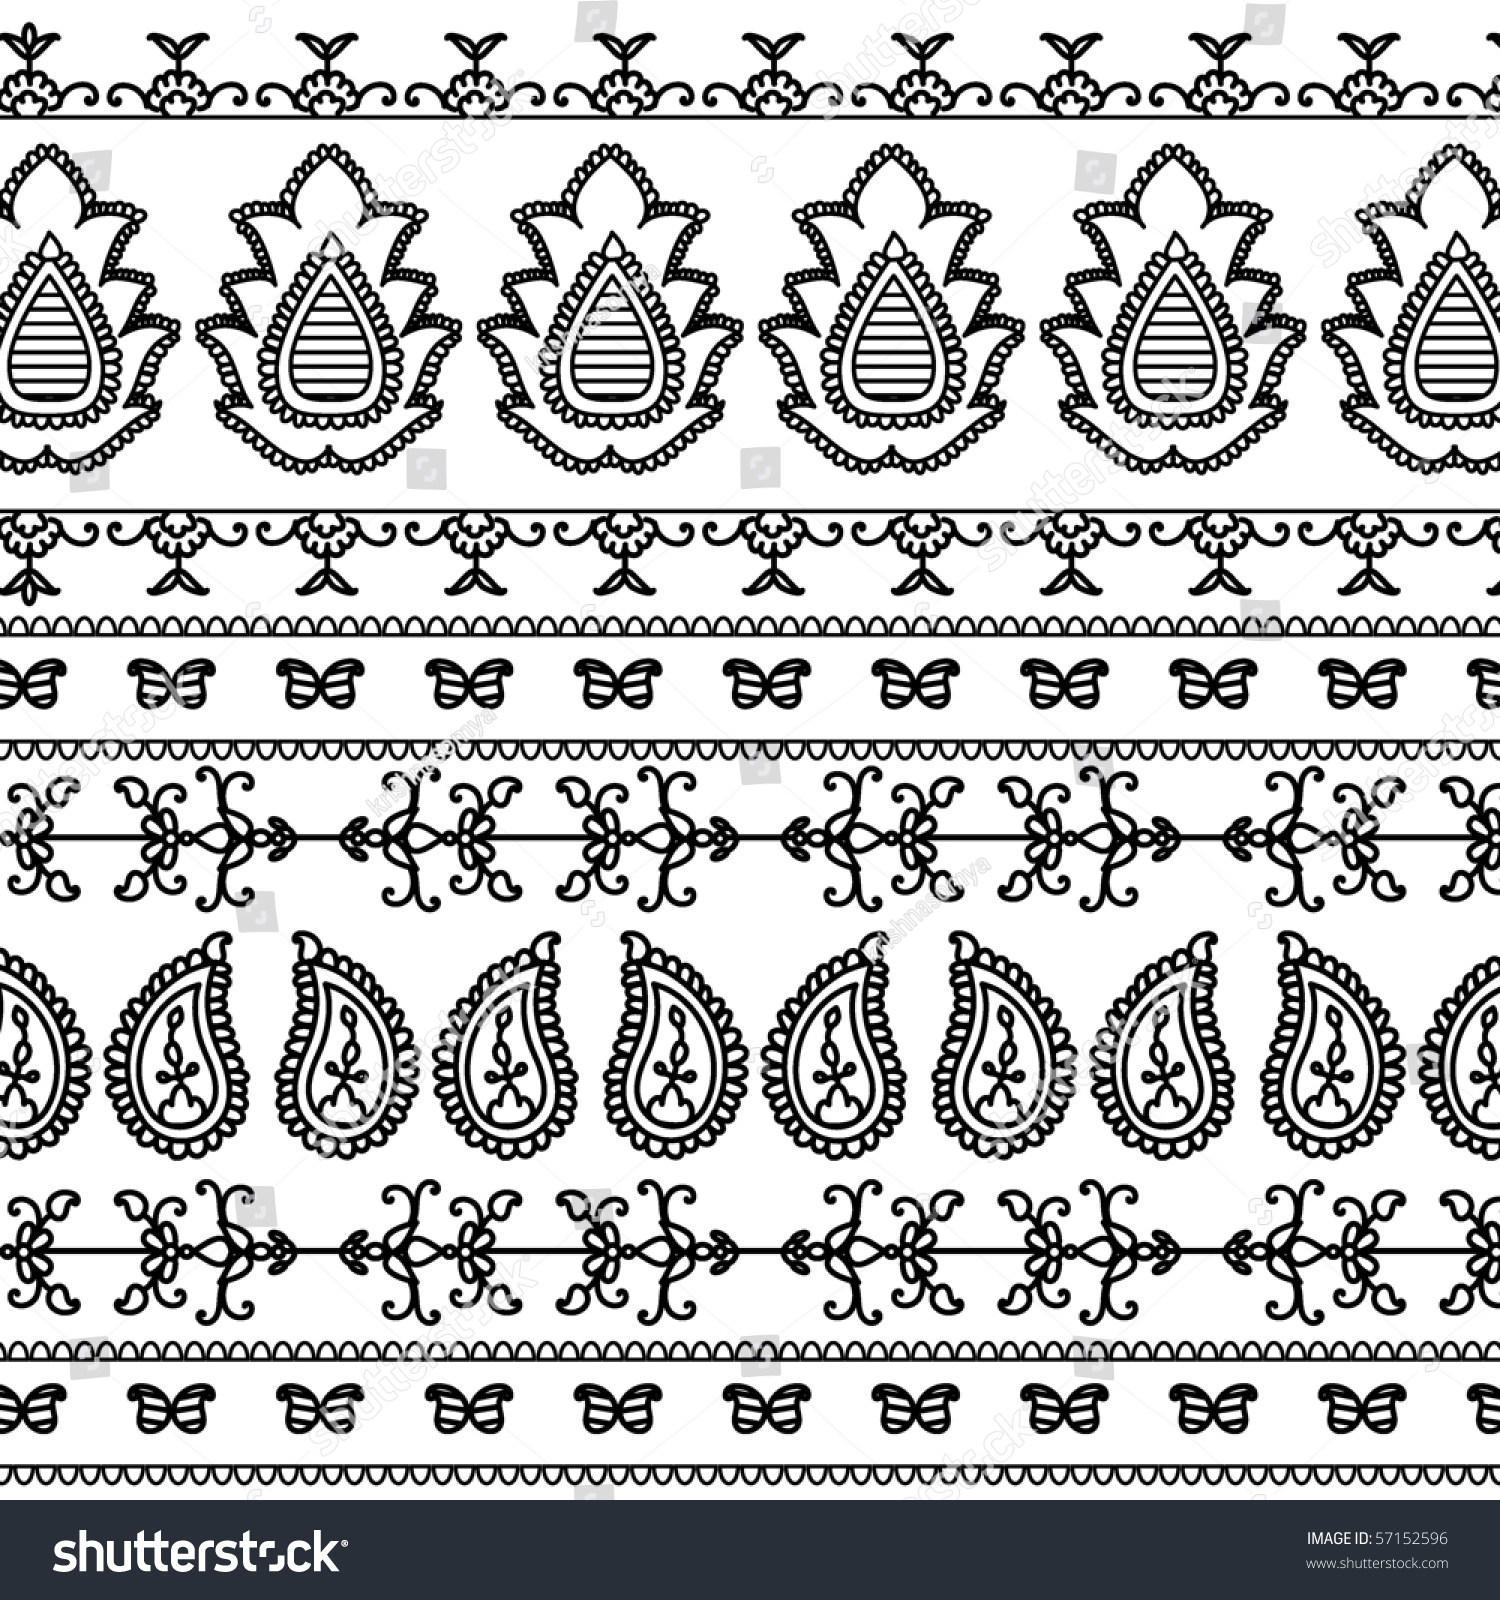 Very Detail Henna Art Inspired Border Designs Stock Vector Illustration ...